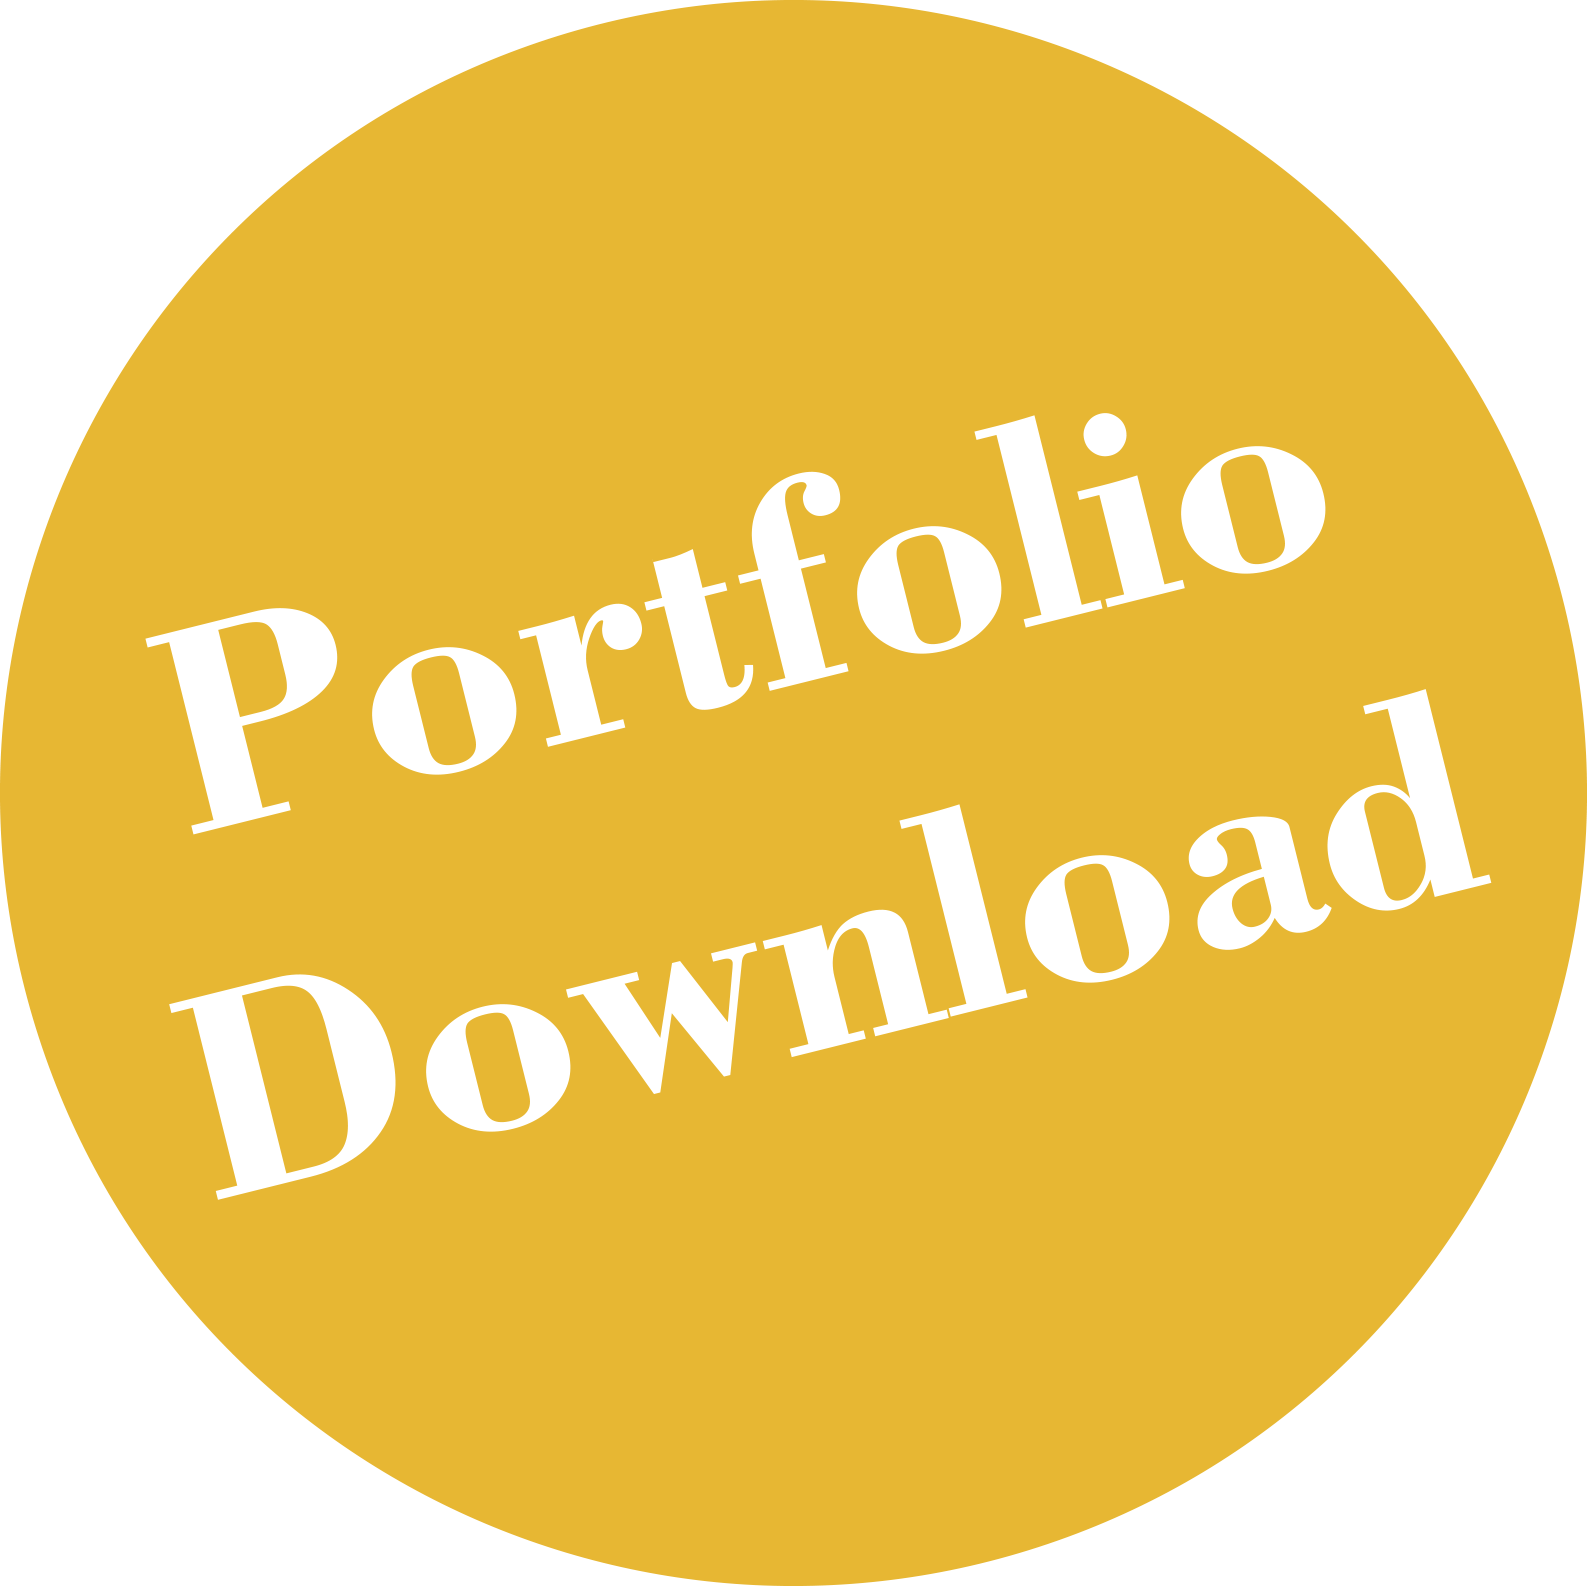 Johanna Seipelt - download portfolio